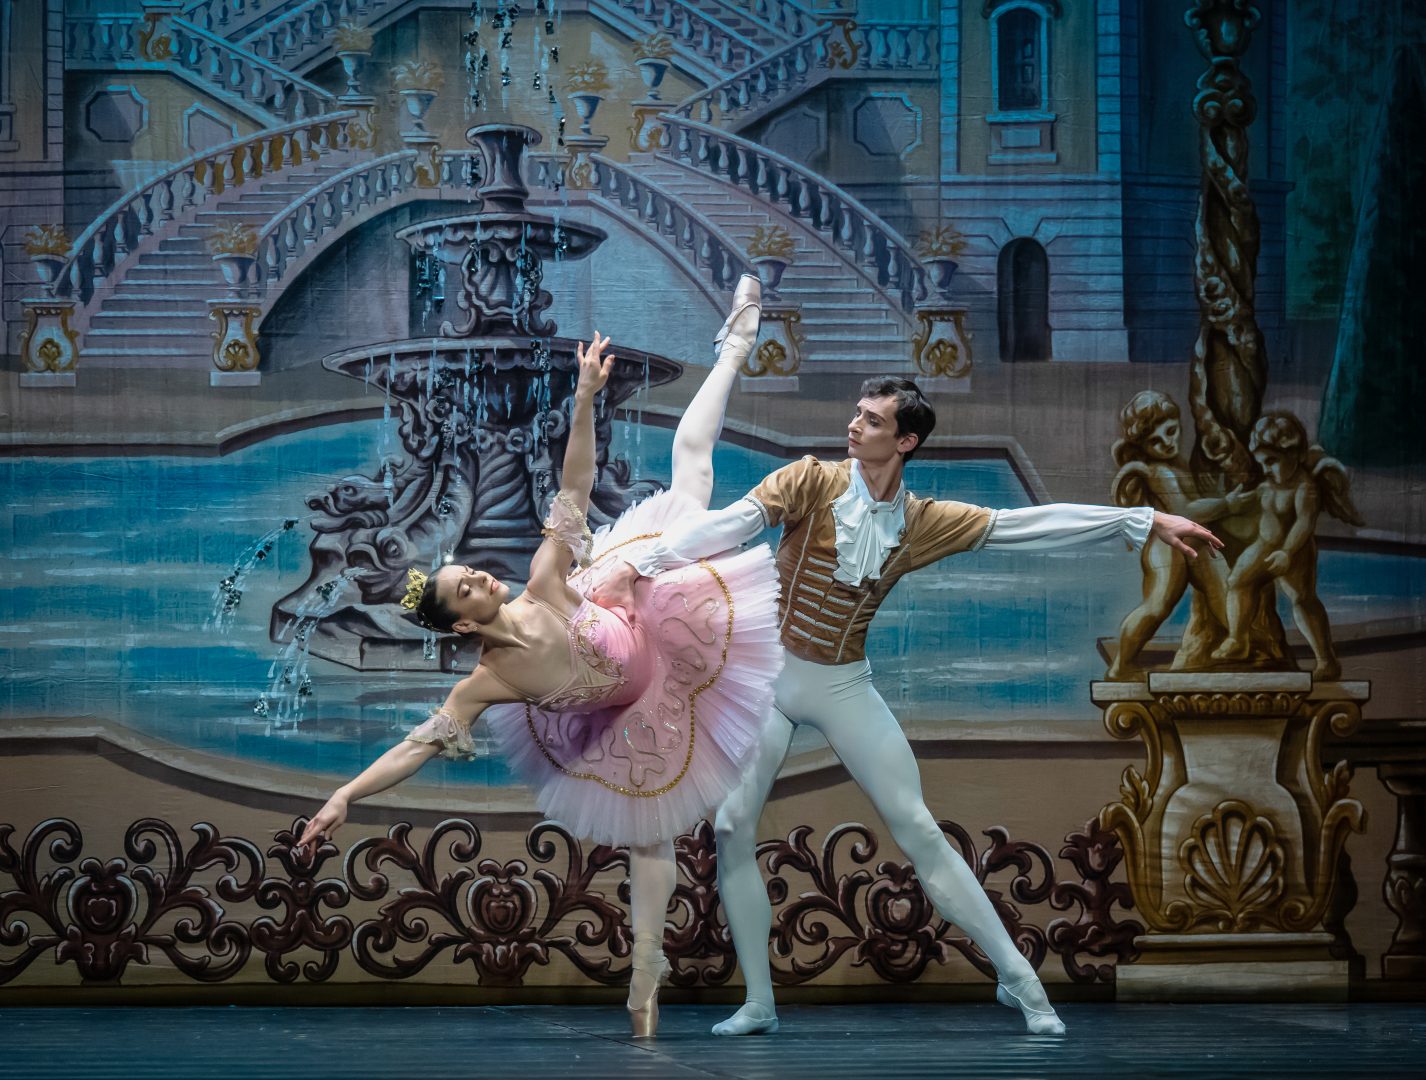 The Royal Czech Ballet returns with Sleeping Beauty